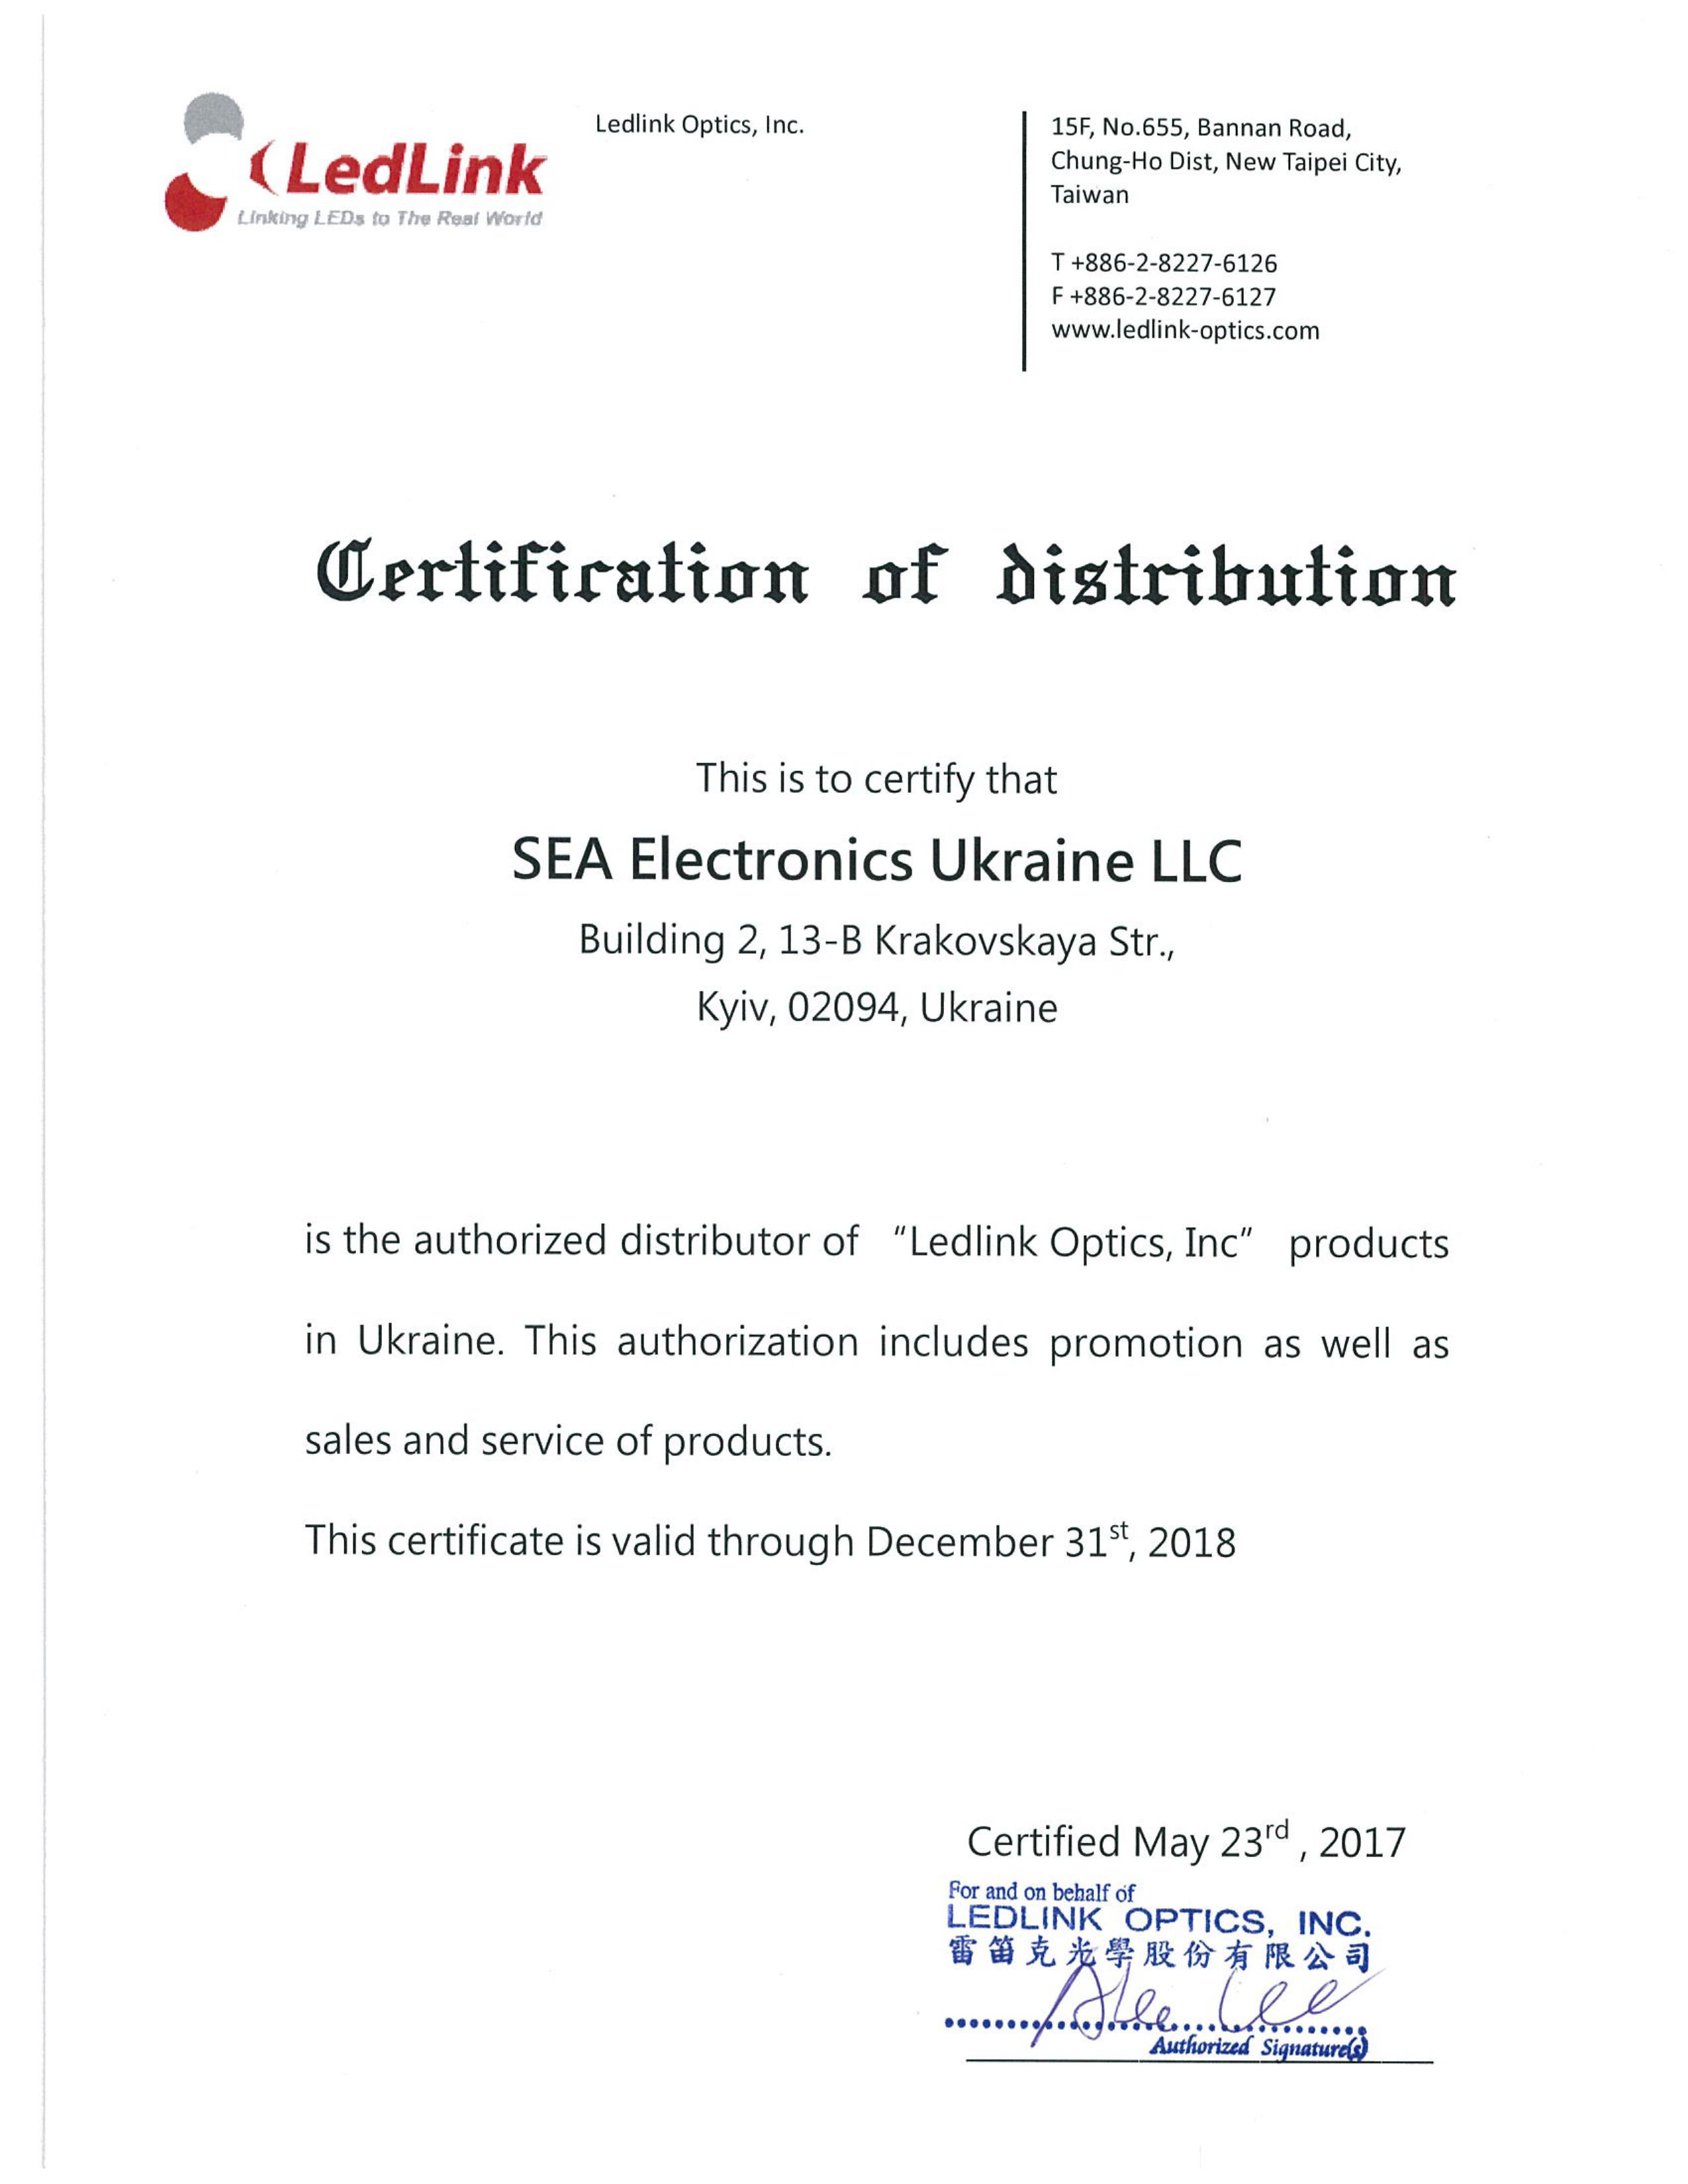 ledlink, ledlink certificate